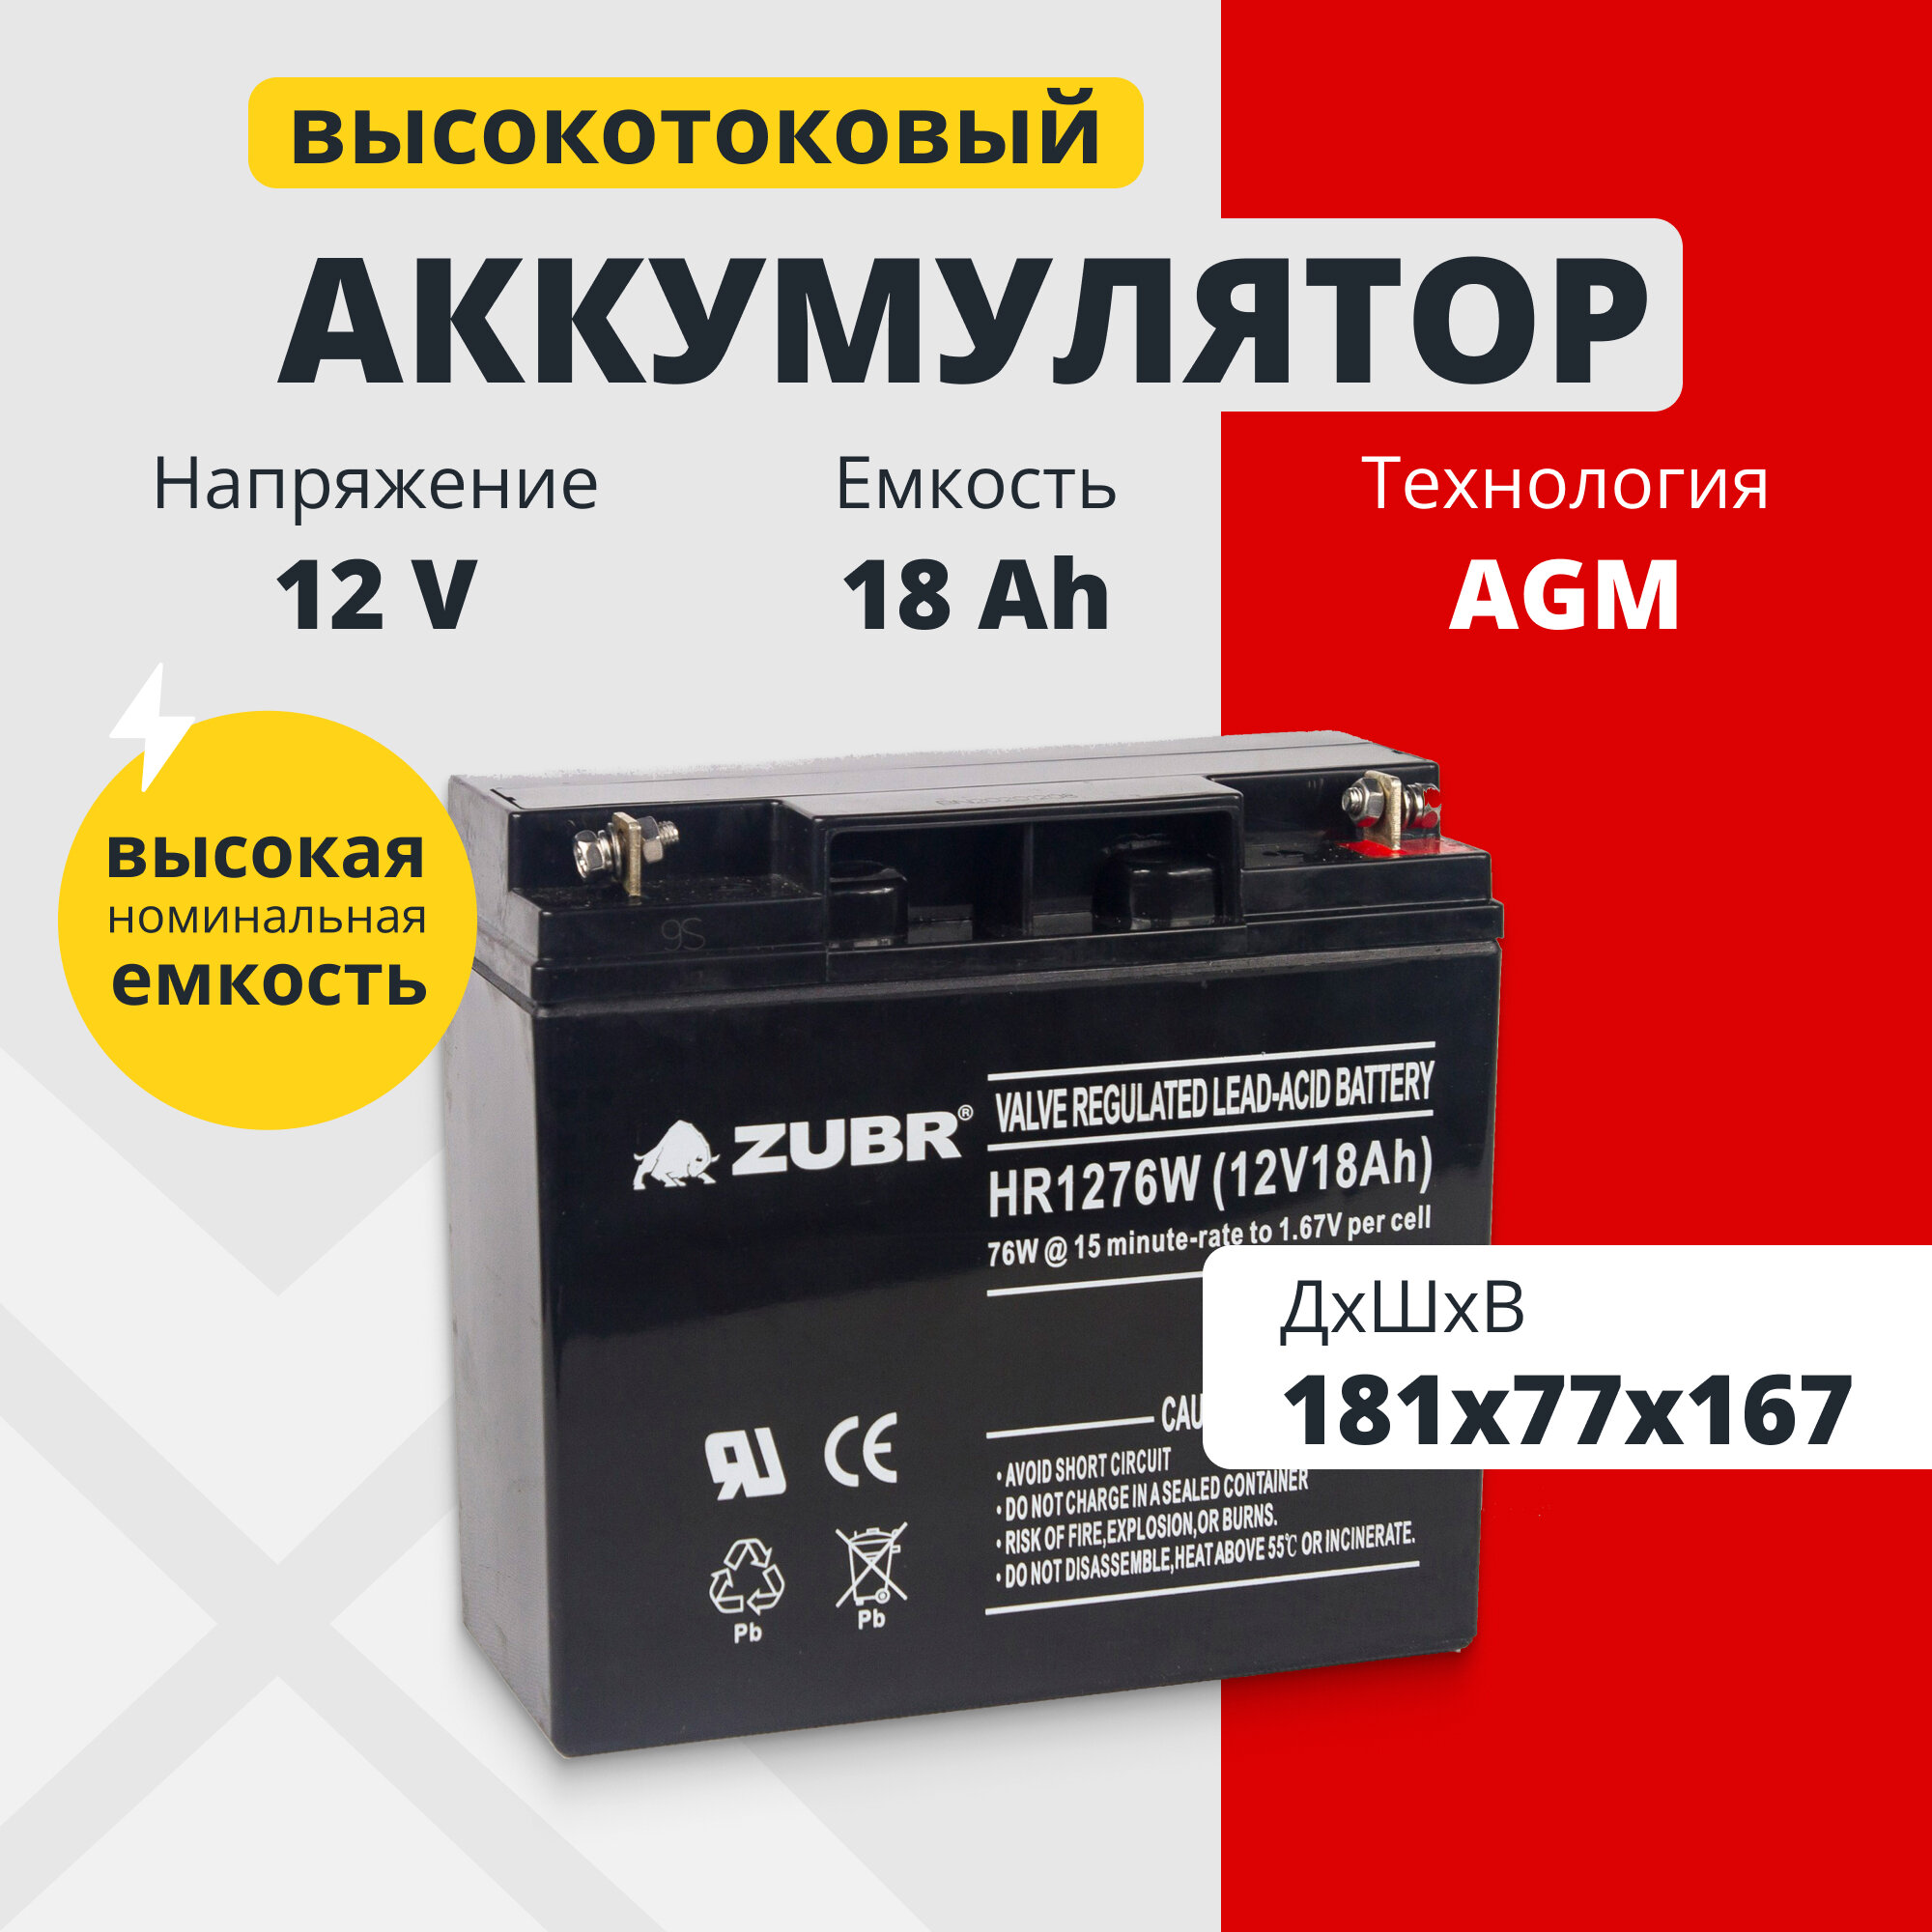 Аккумулятор для ибп 12v 18Ah ZUBR AGM M5/T12 акб котла и насоса отопления 181x77x167 мм